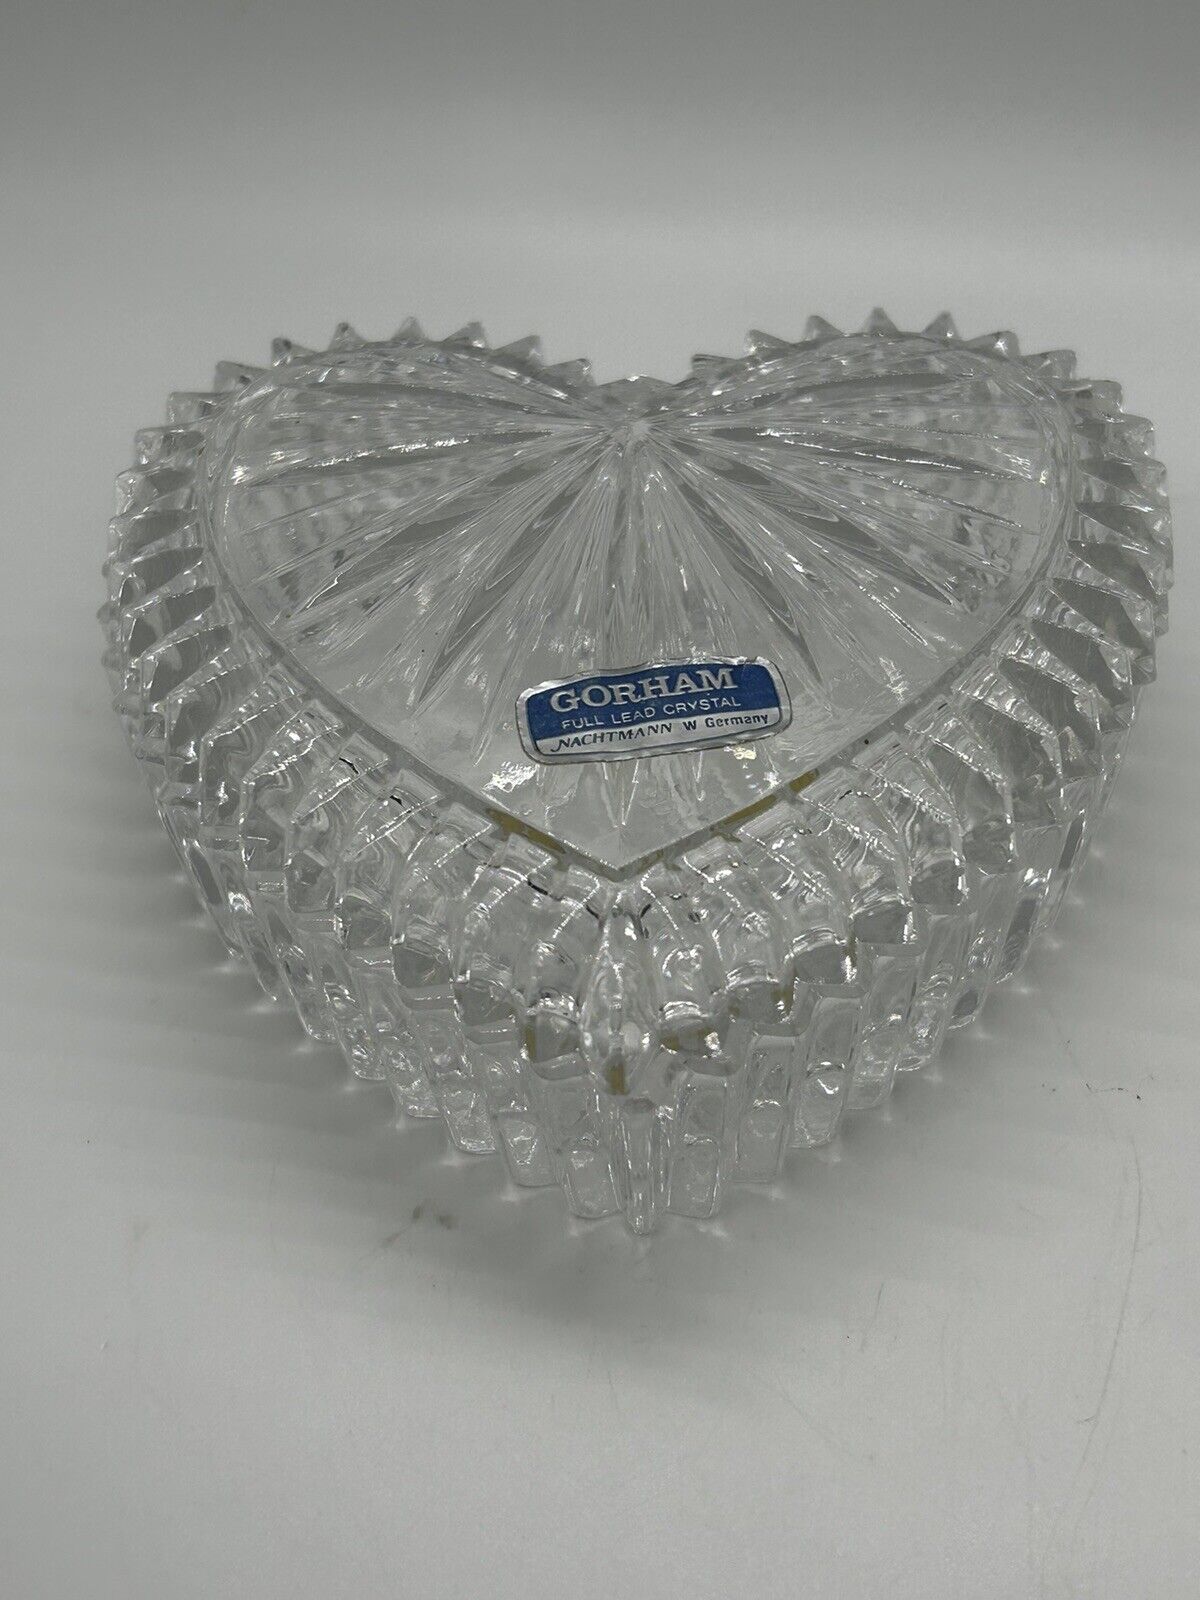 Gorham Heart Shaped Full Lead Crystal Glass Trinket Jewelry Box West Germany